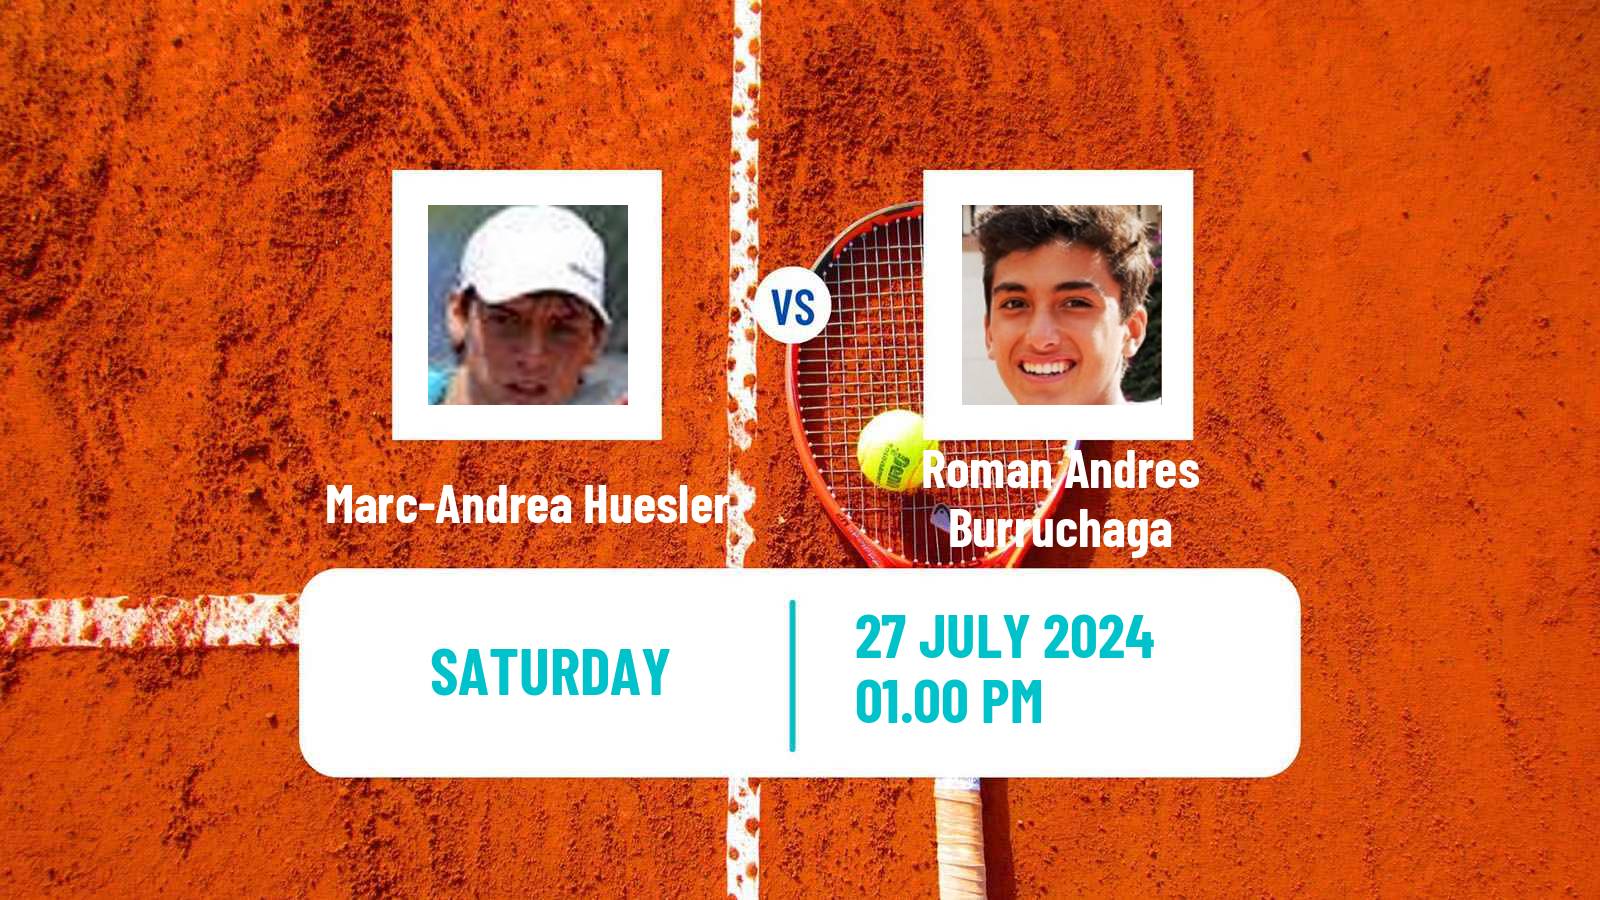 Tennis Zug Challenger Men Marc-Andrea Huesler - Roman Andres Burruchaga